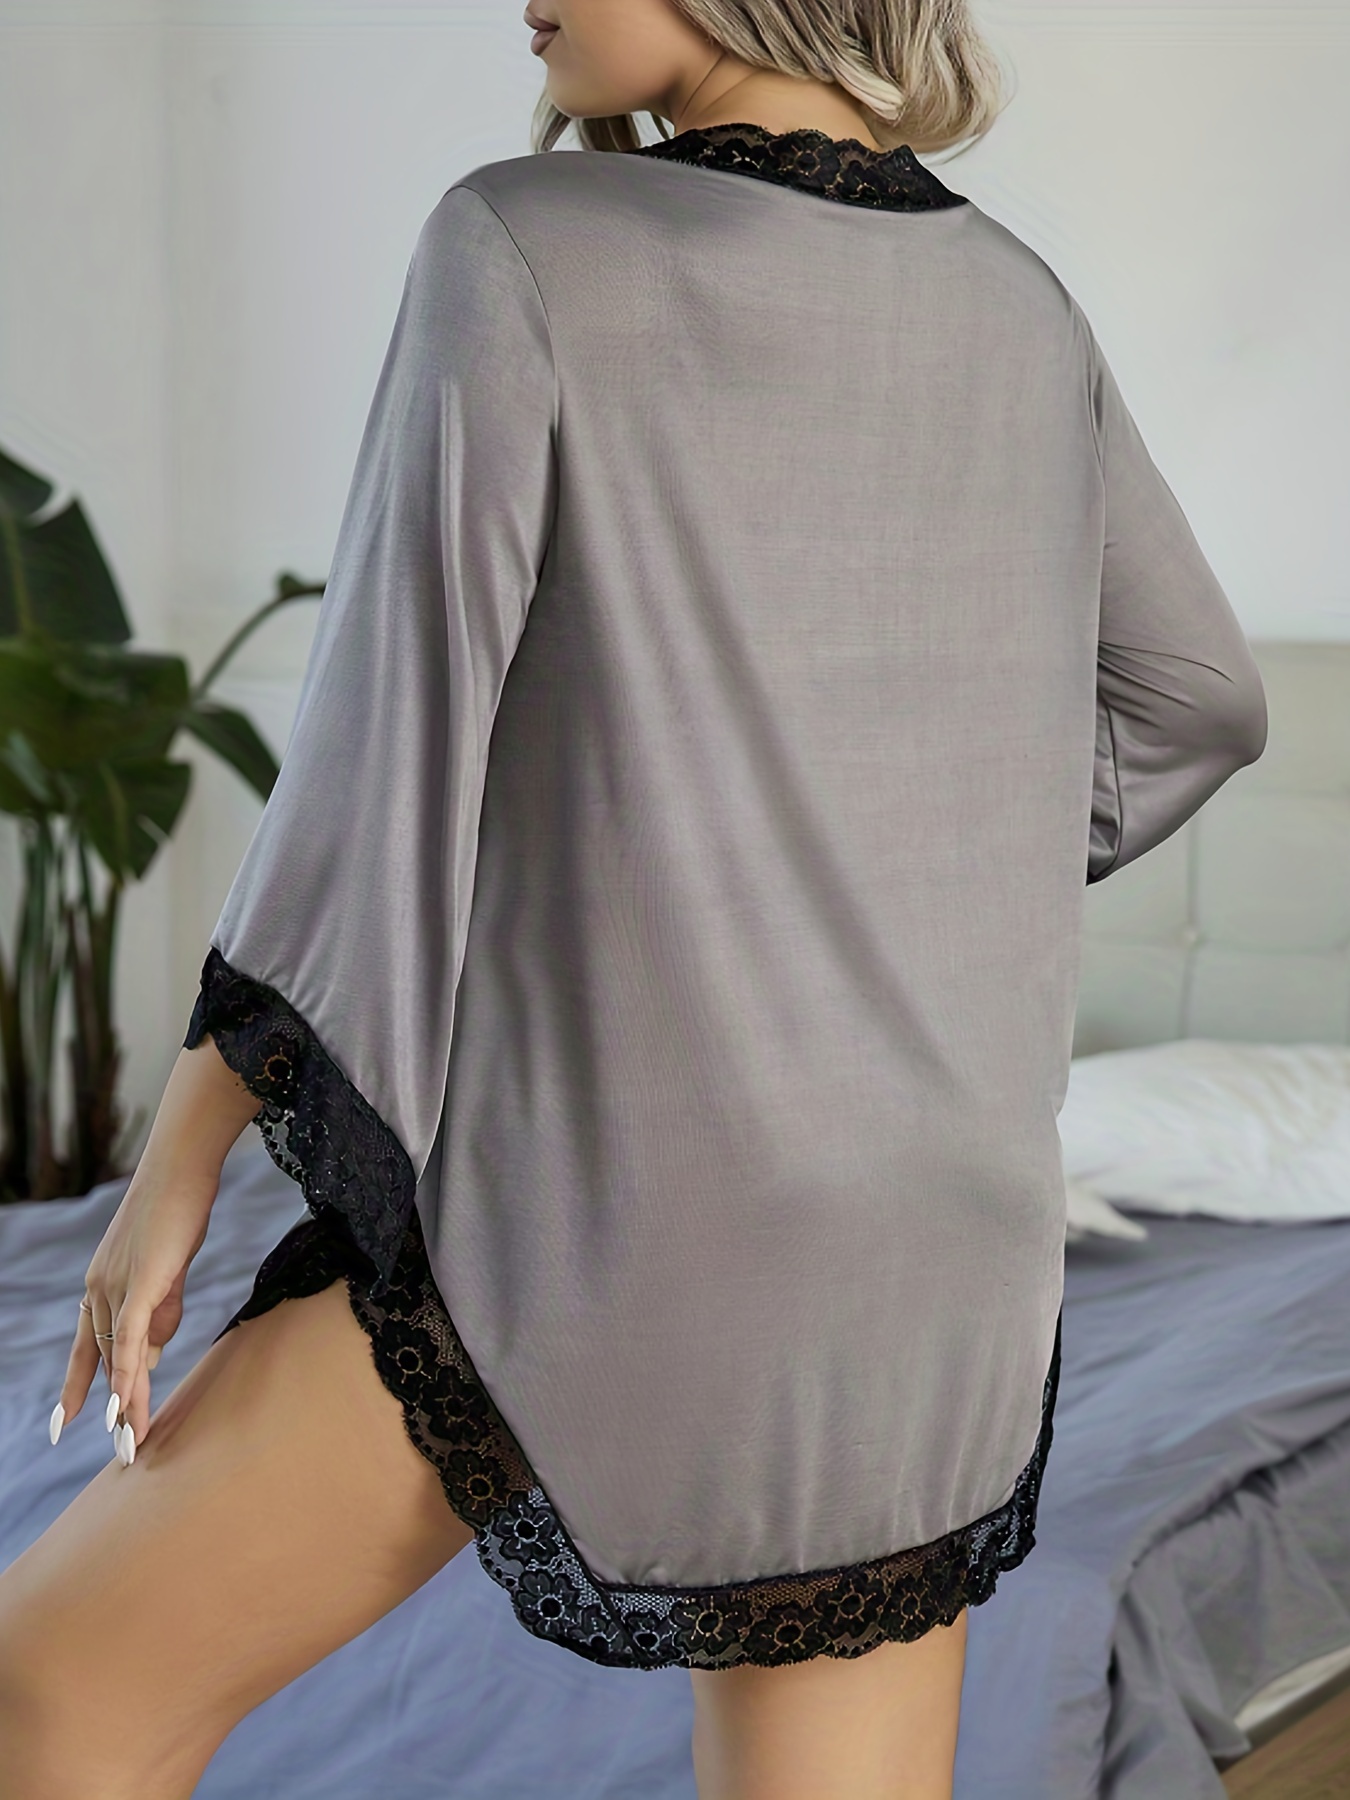 TAIPOVE Women's Lace Trim Nightgown with Built in Bra Sexy Comfort Soft  Sleepwear S-XXL